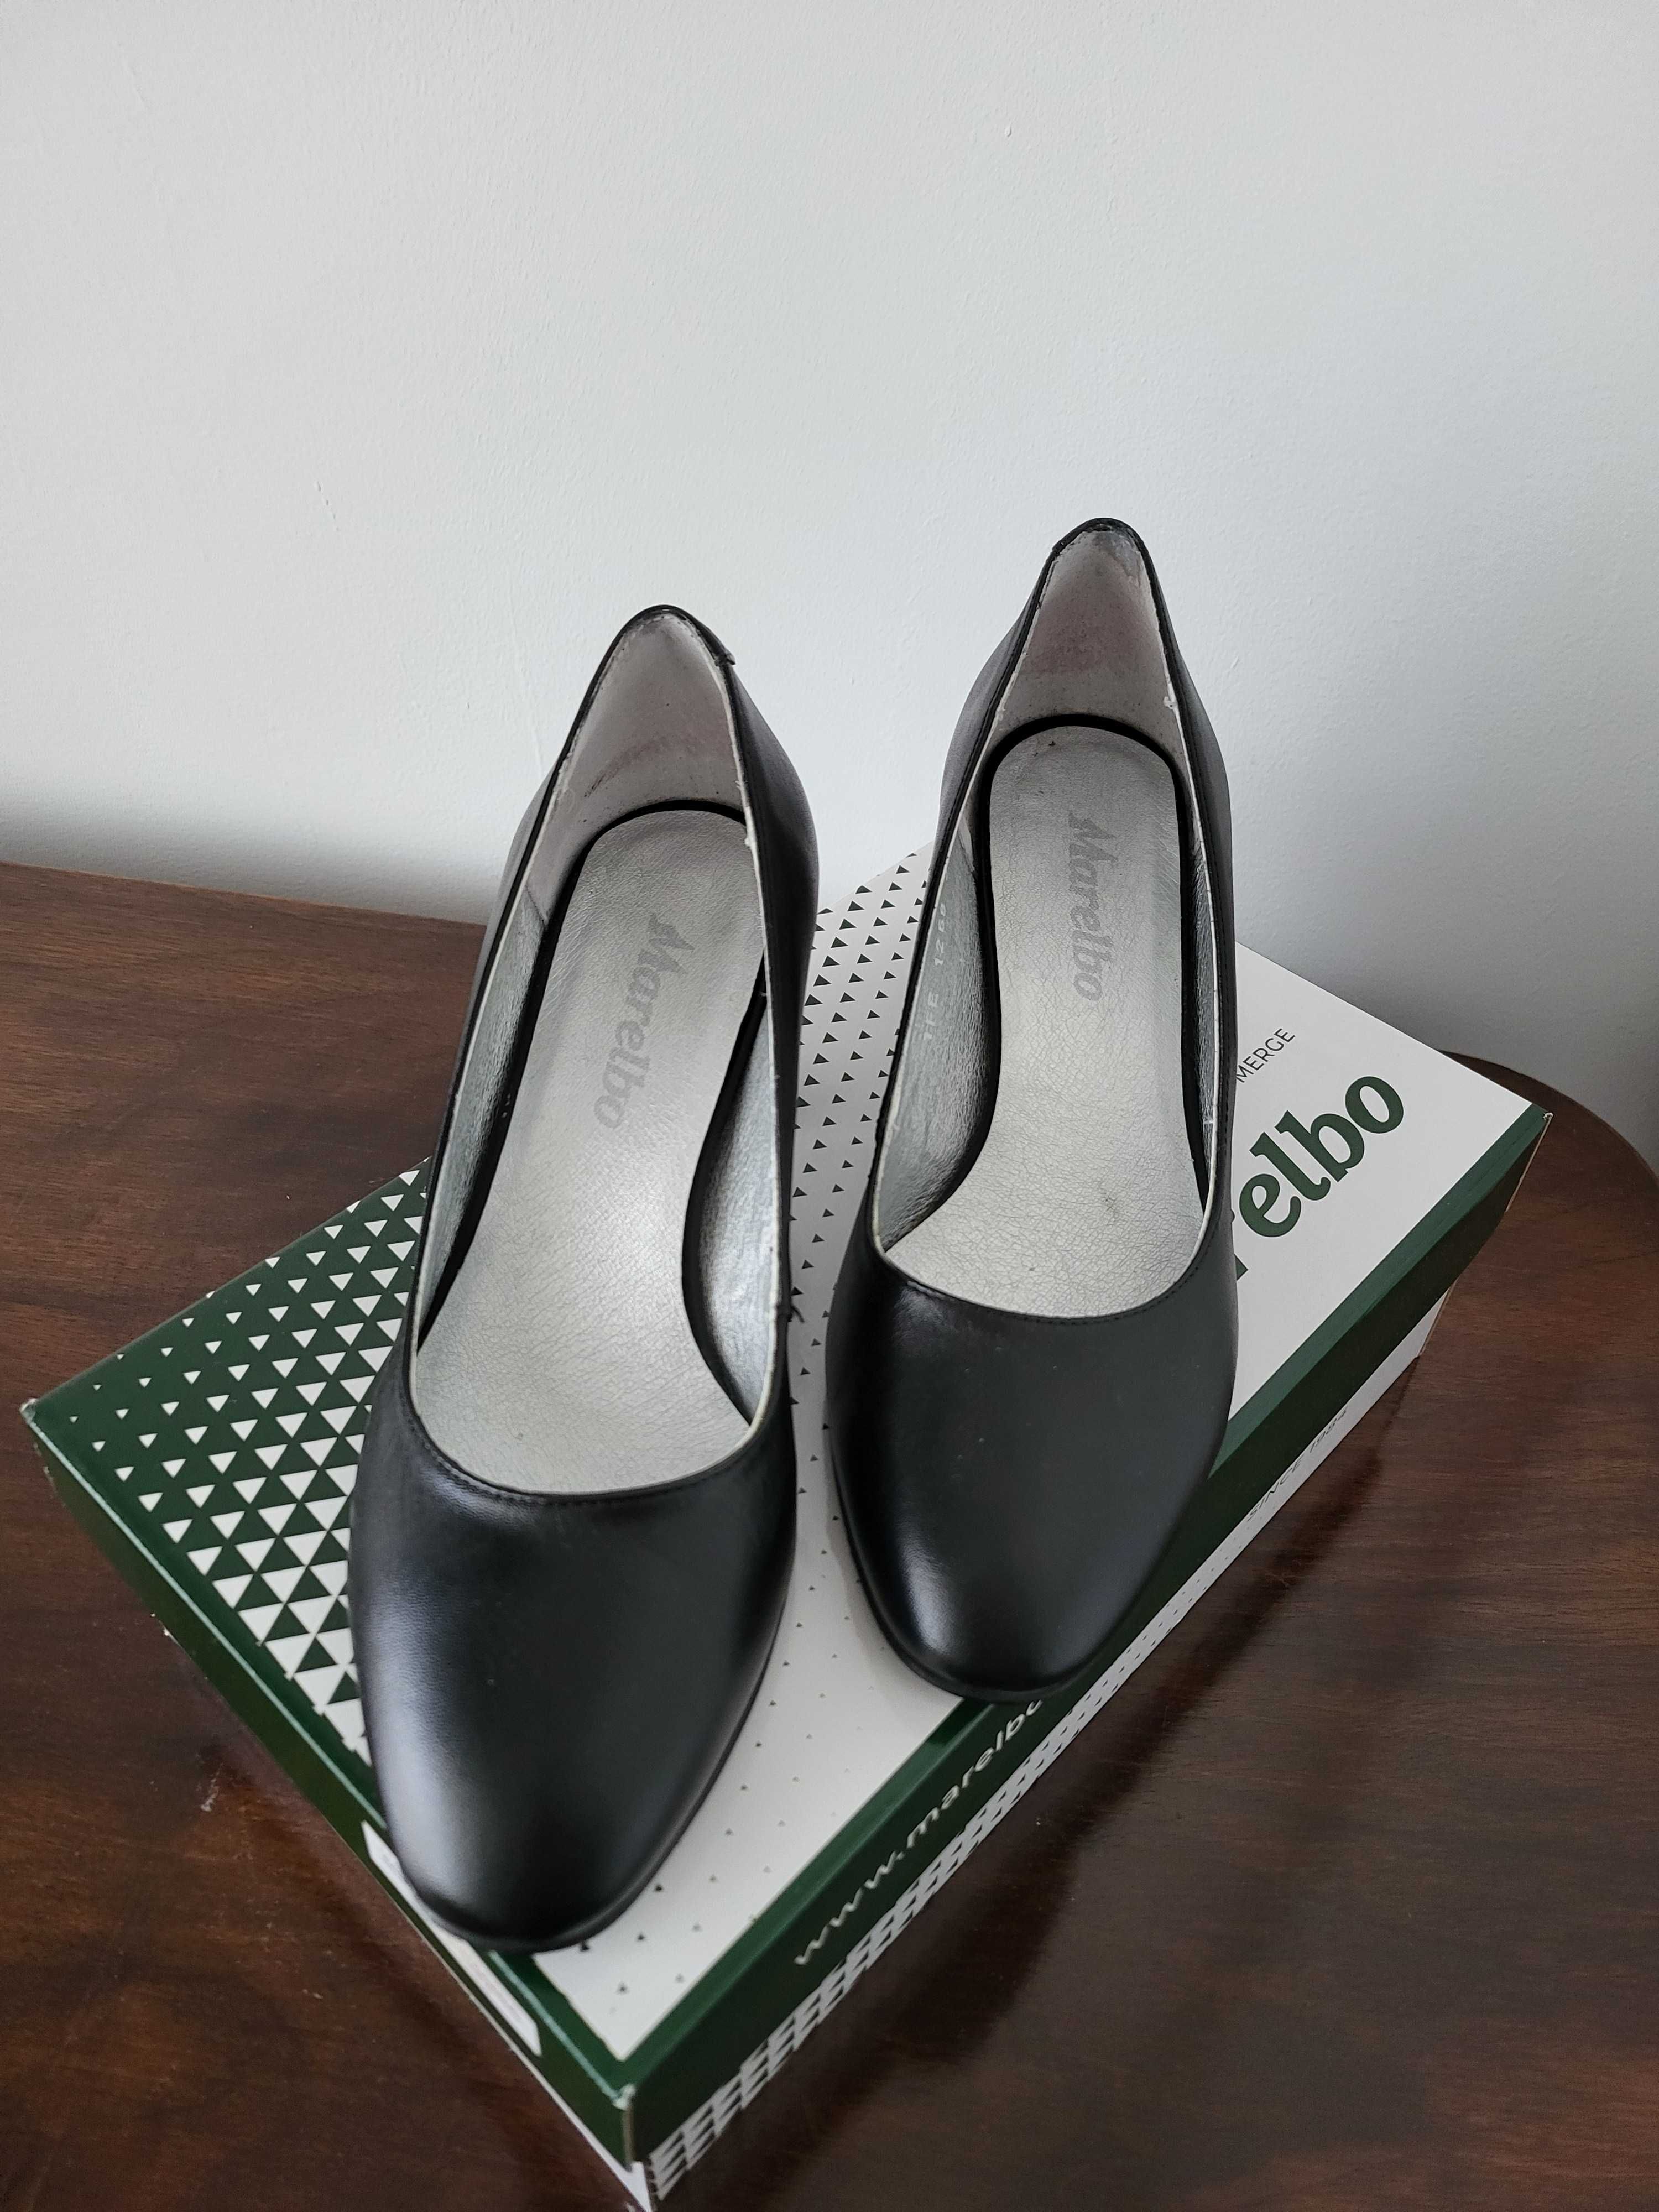 Vand pantofi eleganti dama 38 negru (Marelbo)